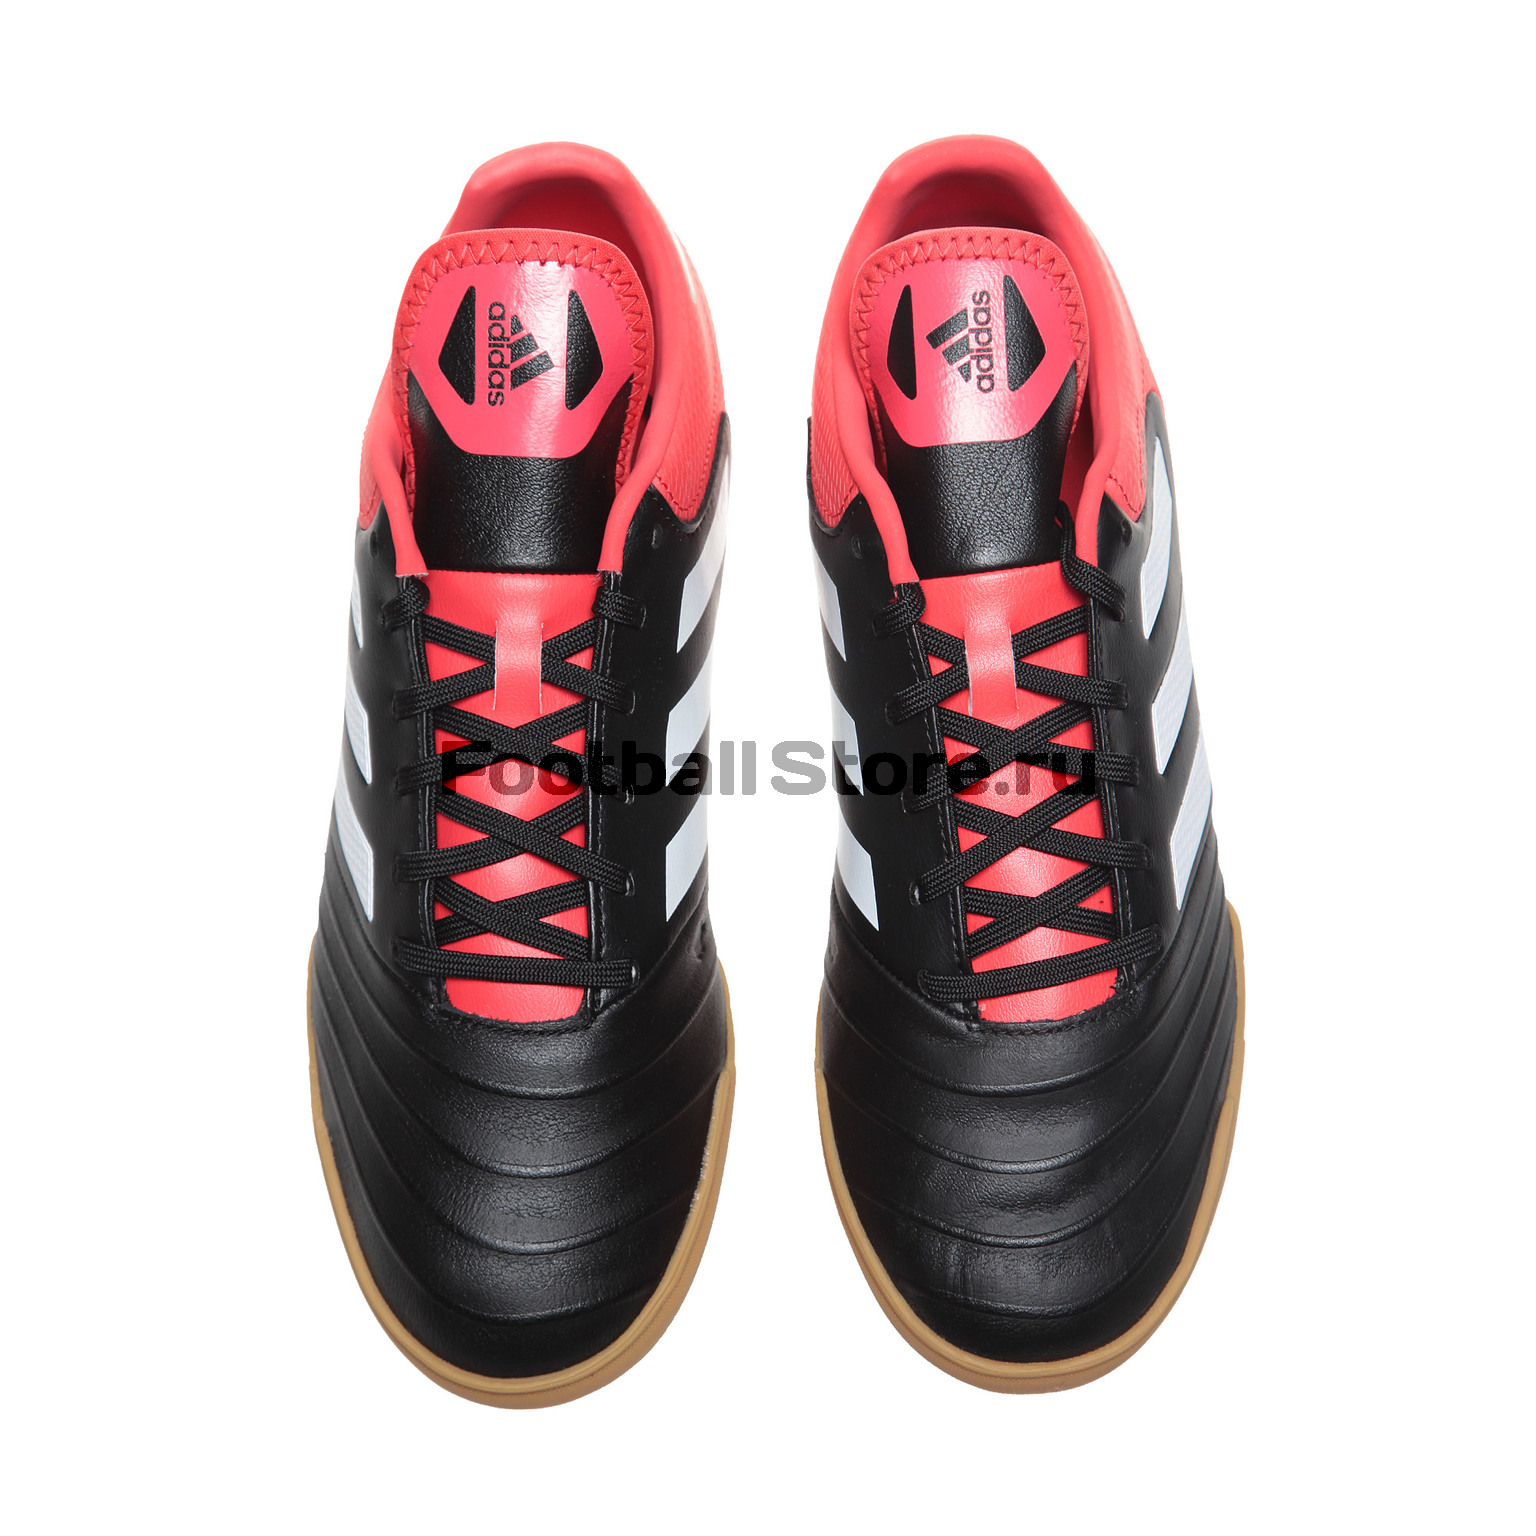 Обувь для зала Adidas Copa Tango 18.3 IN CP9017